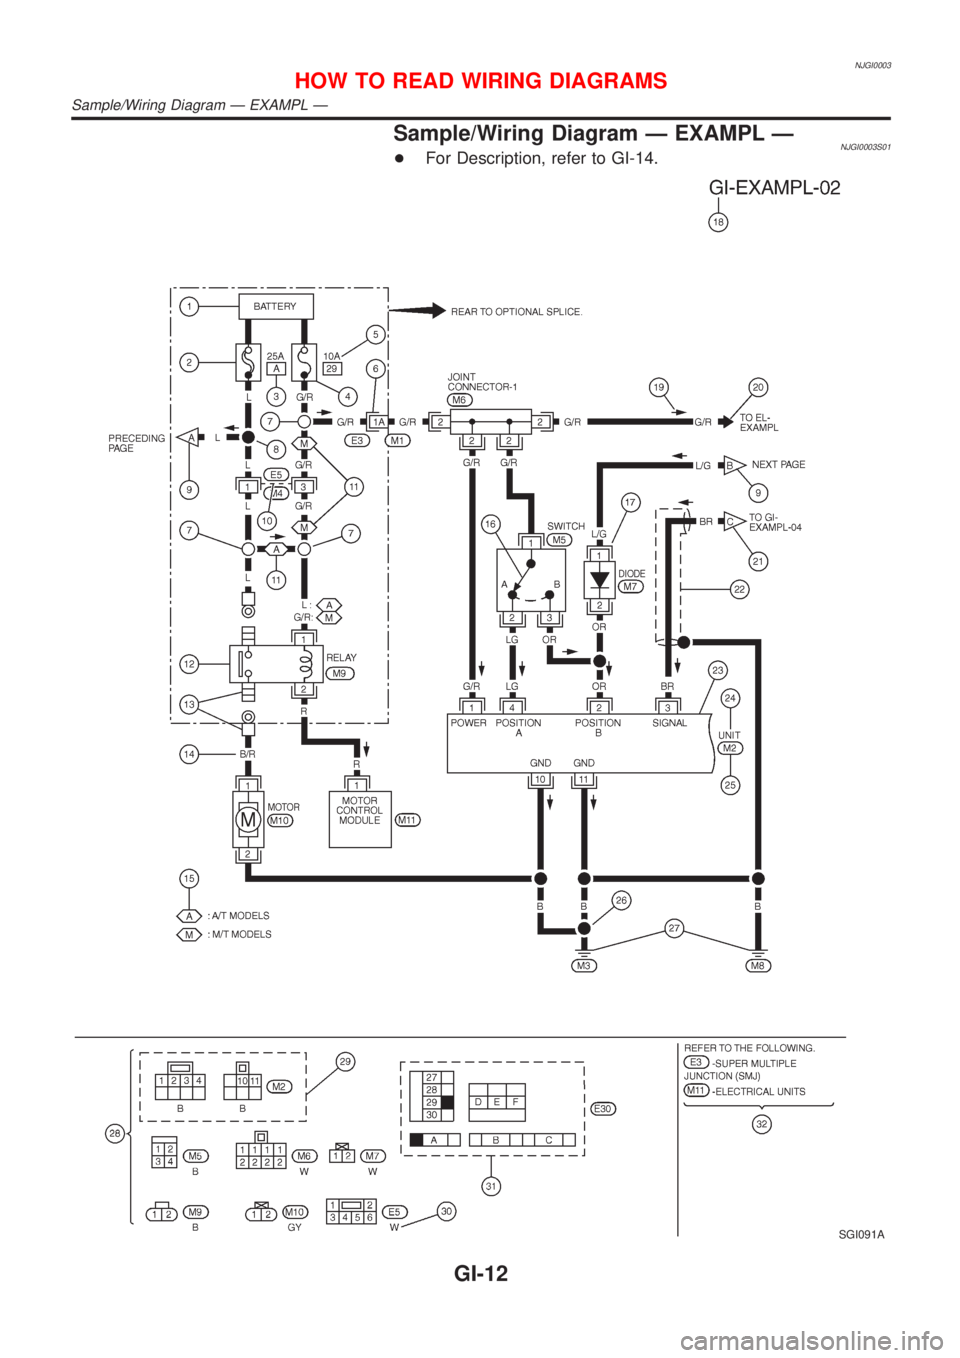 NISSAN ALMERA N16 2001  Electronic Repair Manual NJGI0003
Sample/Wiring Diagram Ð EXAMPL ÐNJGI0003S01+For Description, refer to GI-14.
SGI091A
HOW TO READ WIRING DIAGRAMS
Sample/Wiring Diagram Ð EXAMPL Ð
GI-12 